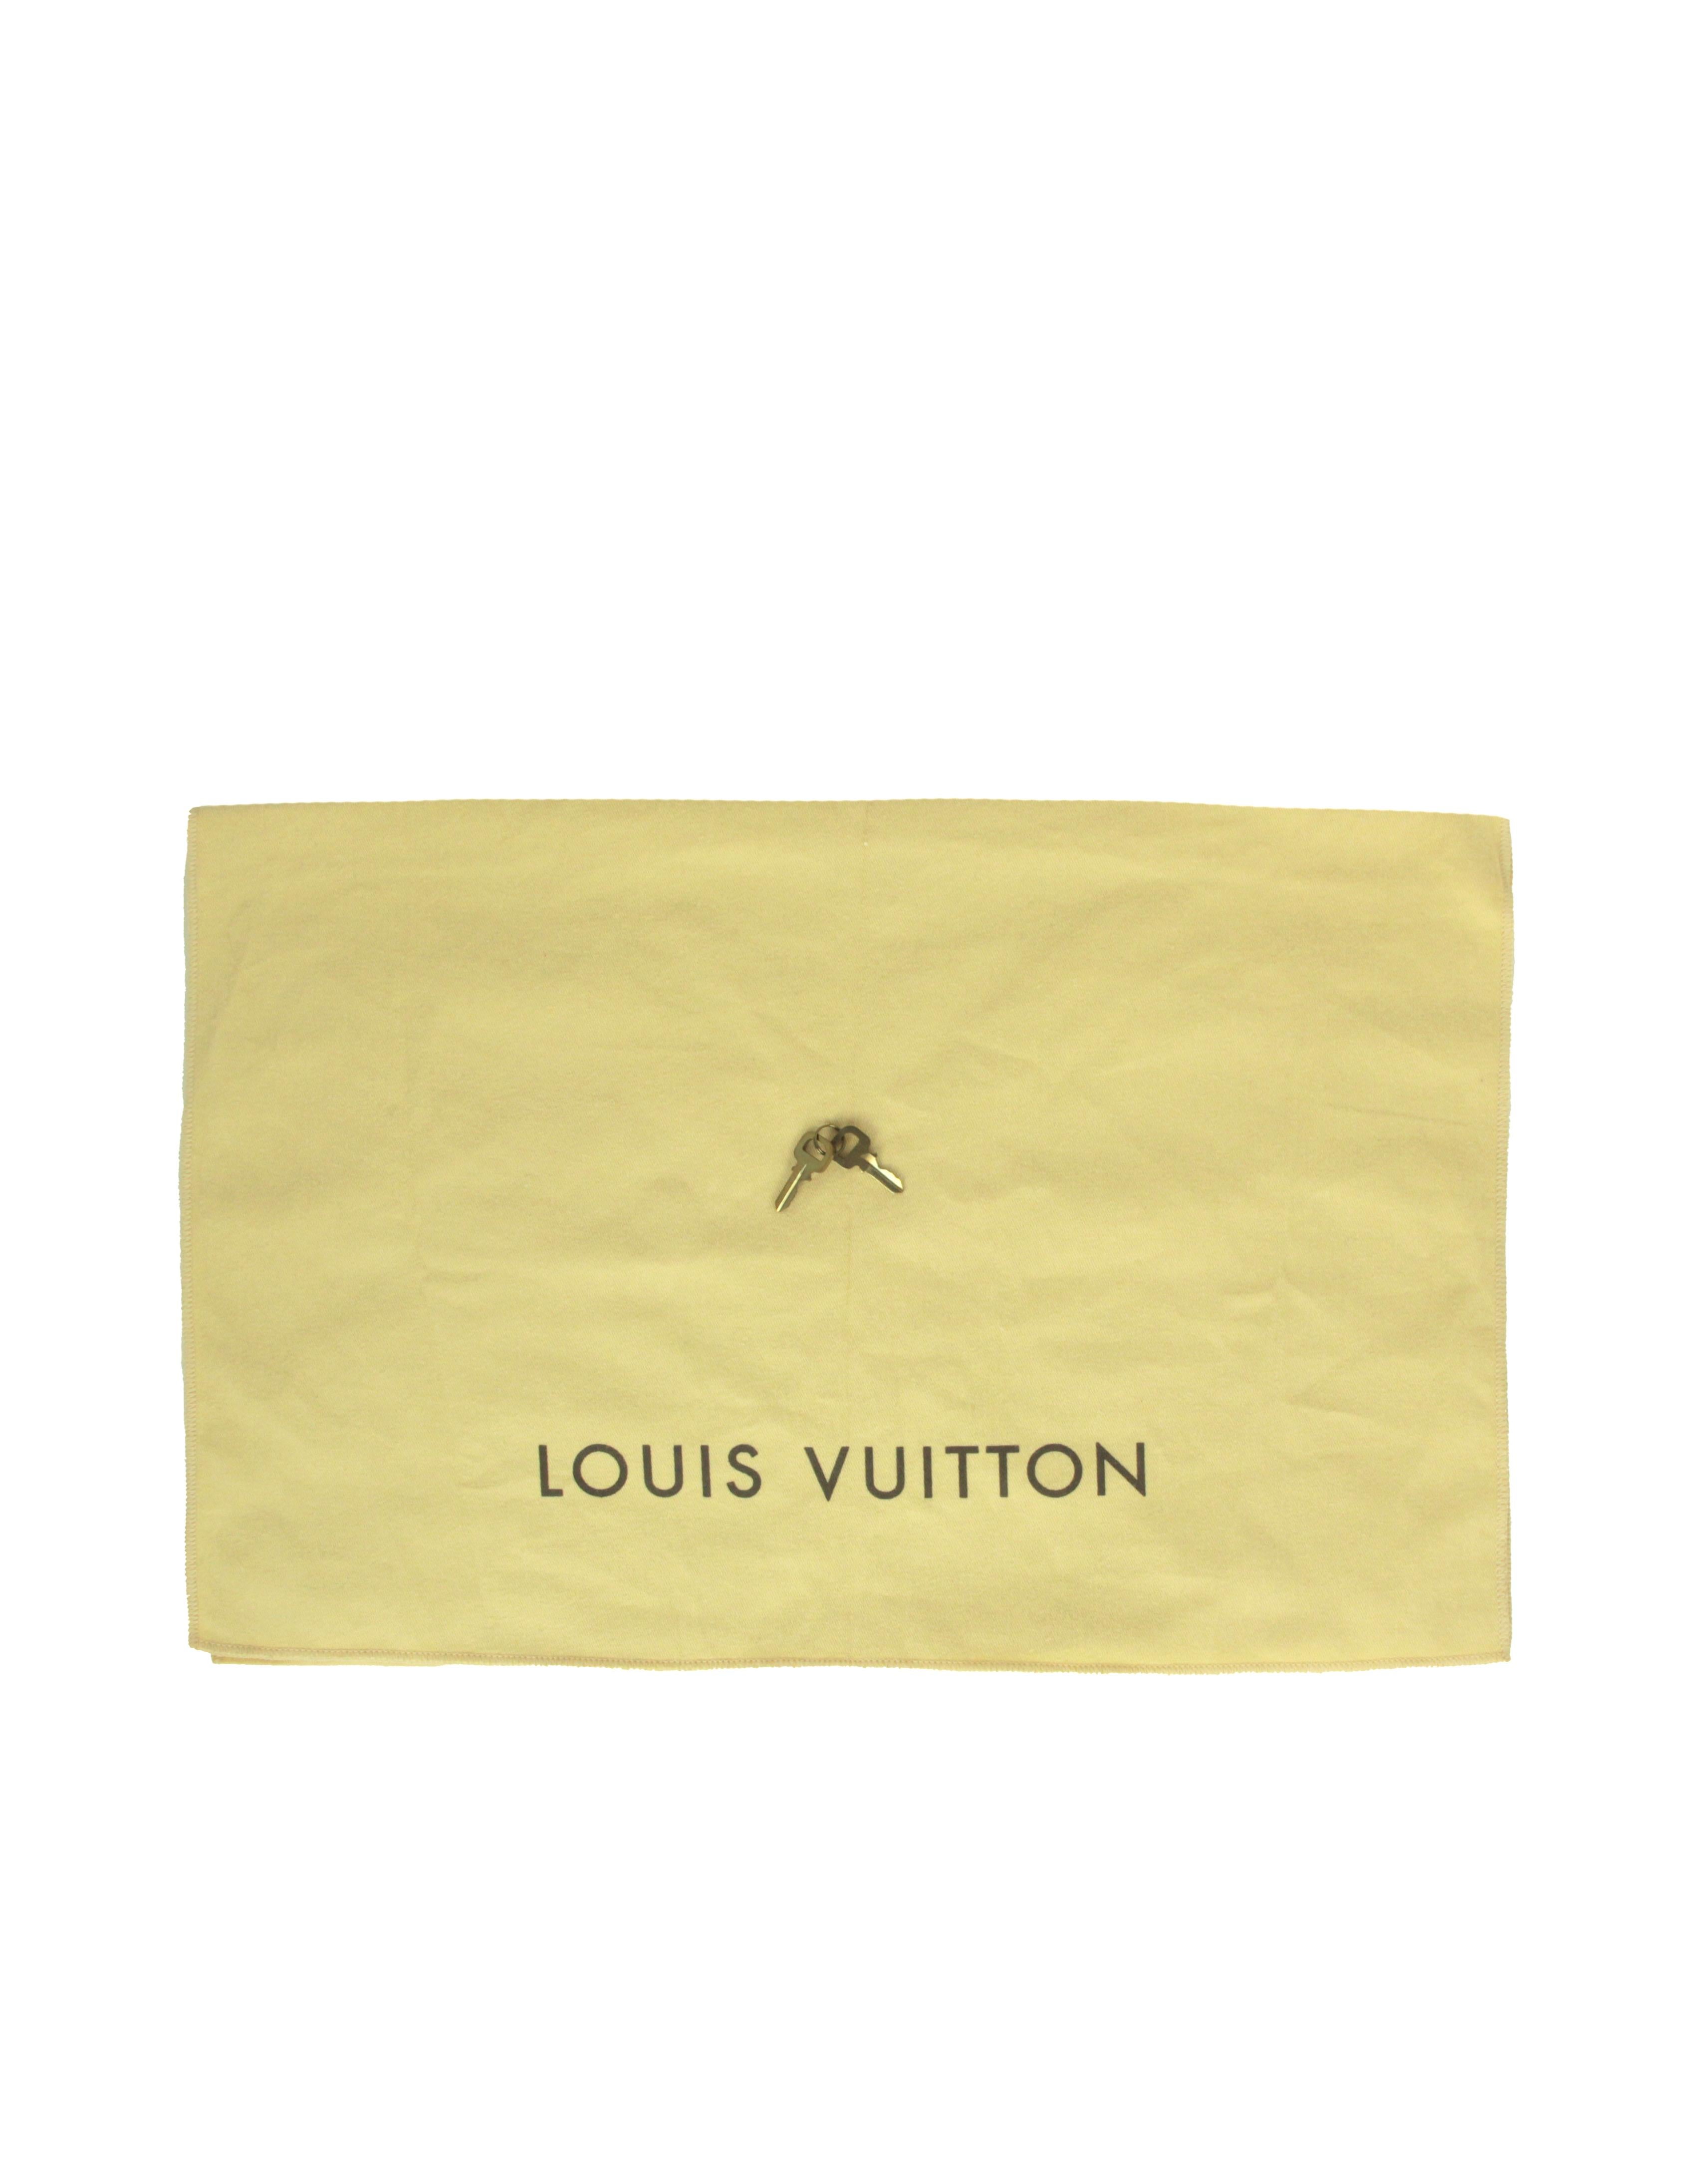 Louis Vuitton Damier Ebene Speedy 35 Bag For Sale 3